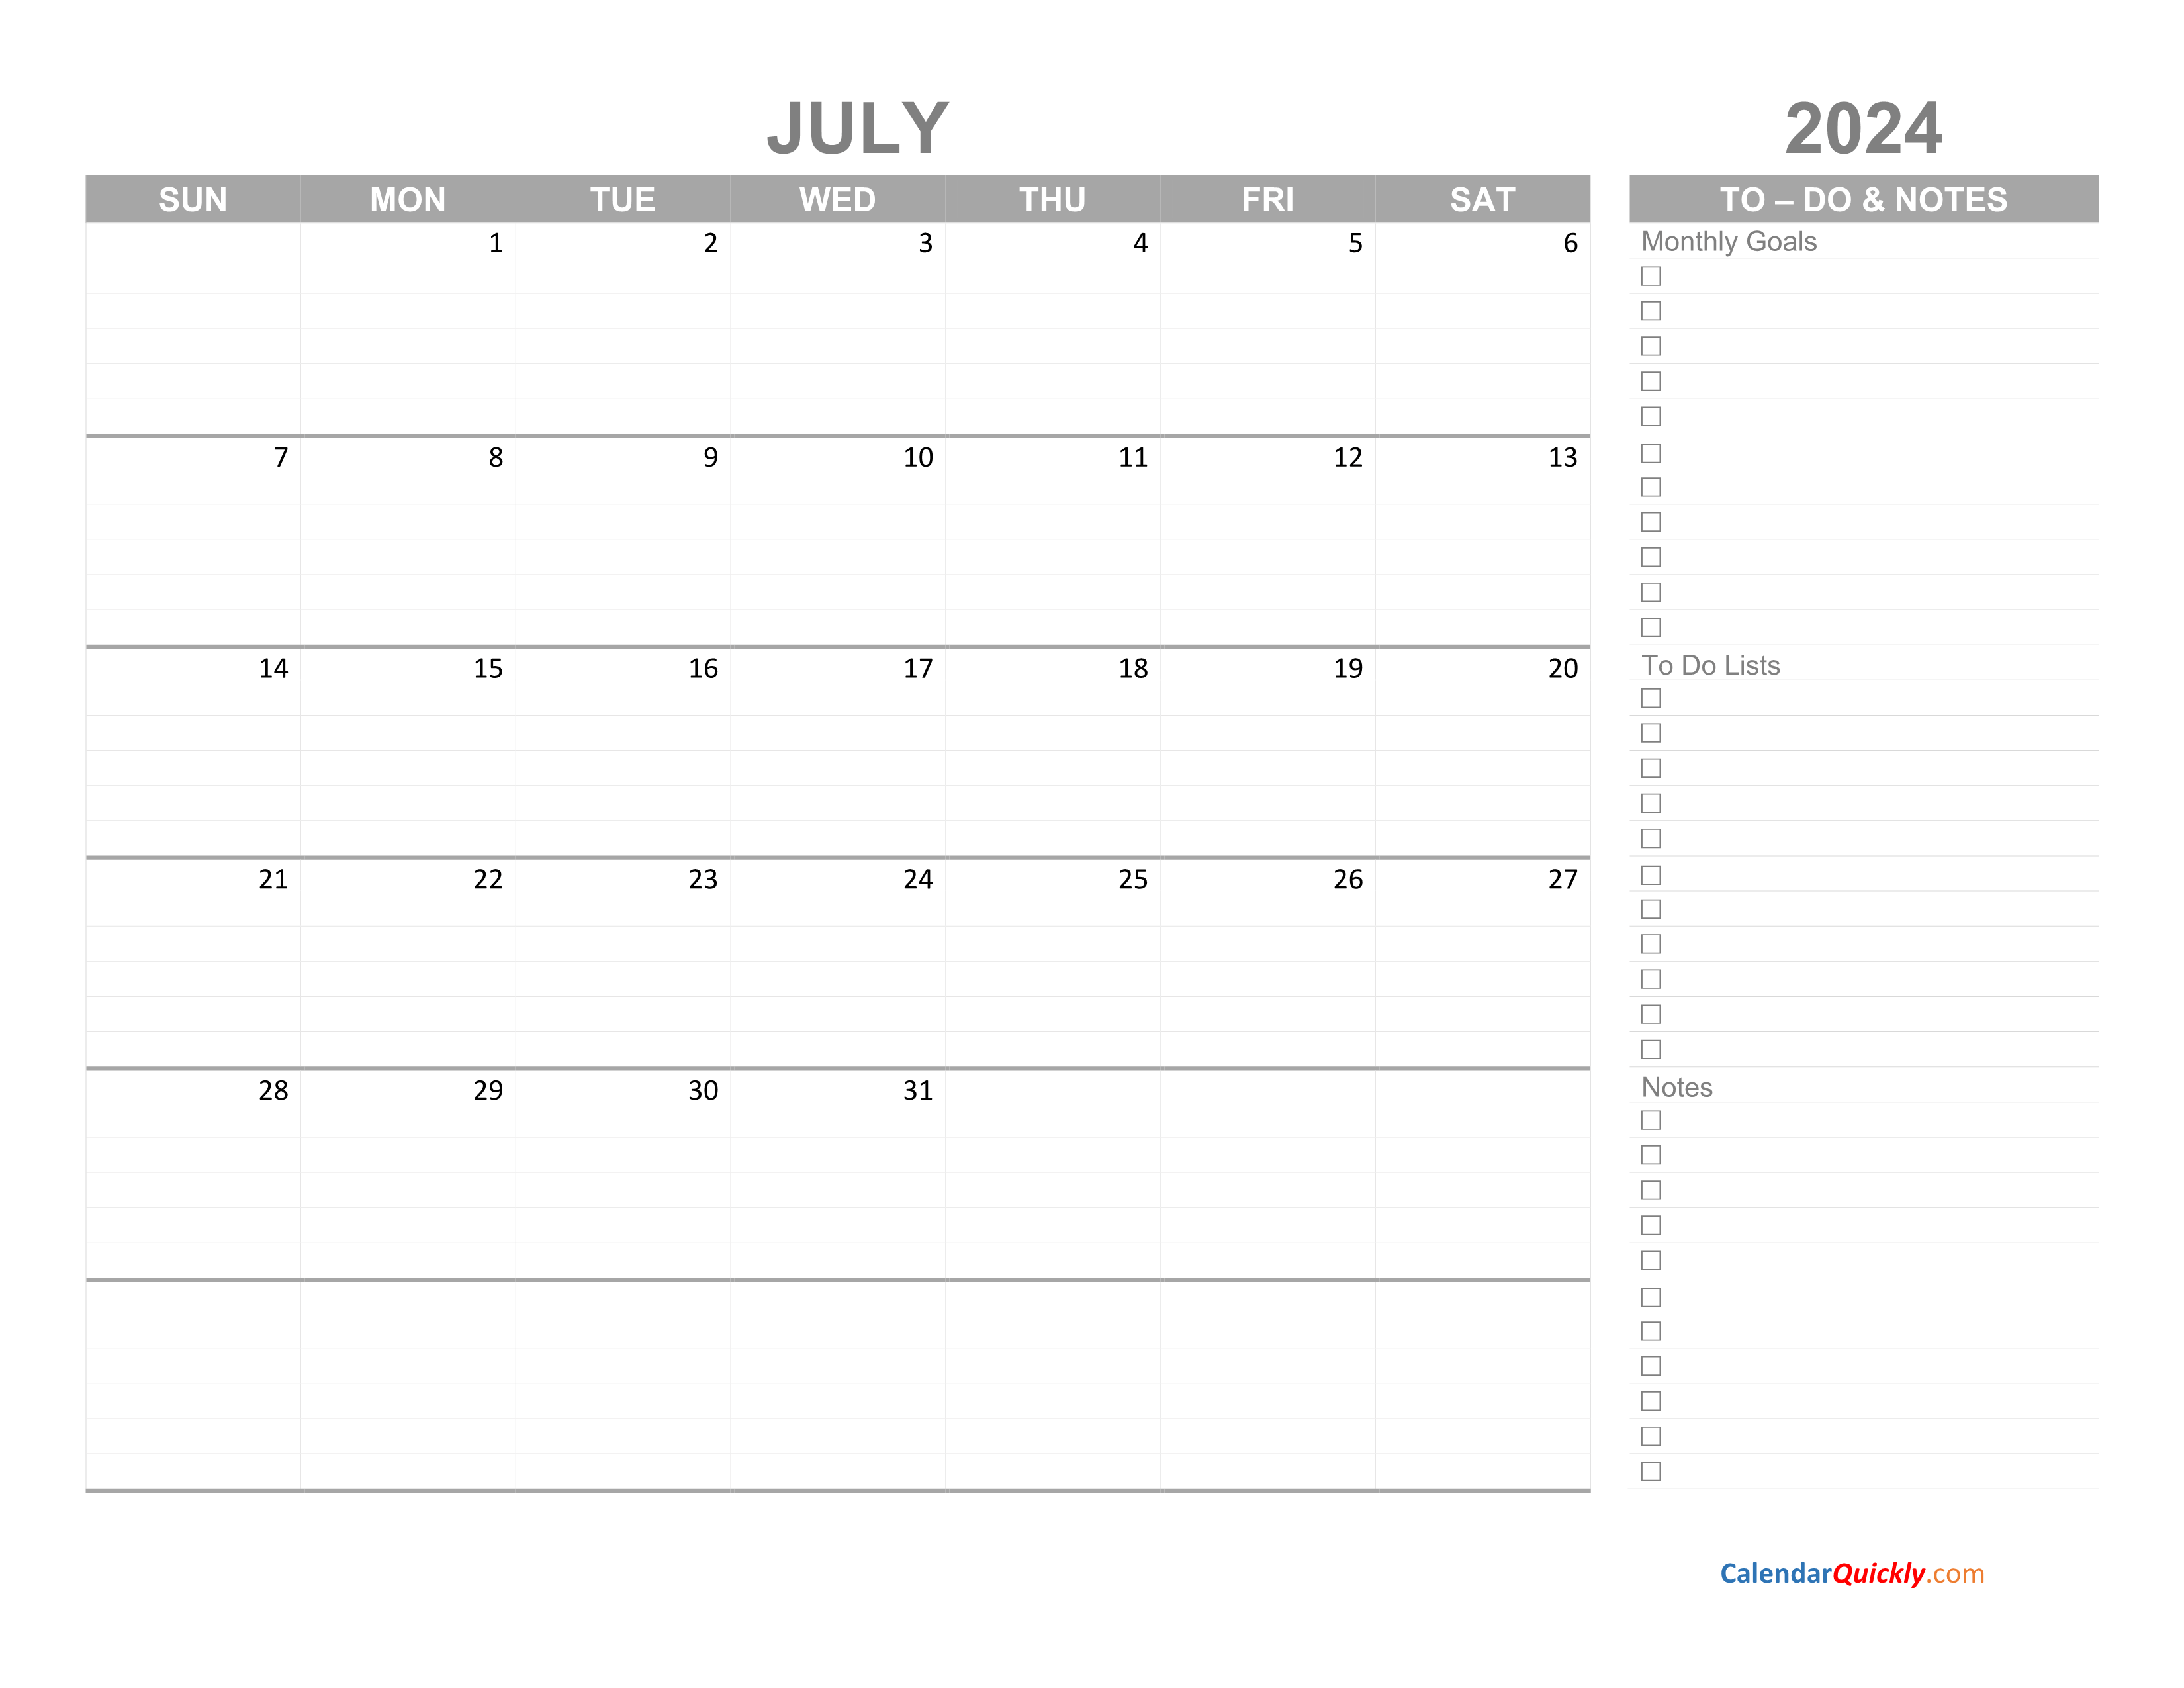 July 2024 Calendar with To-Do List | Calendar Quickly